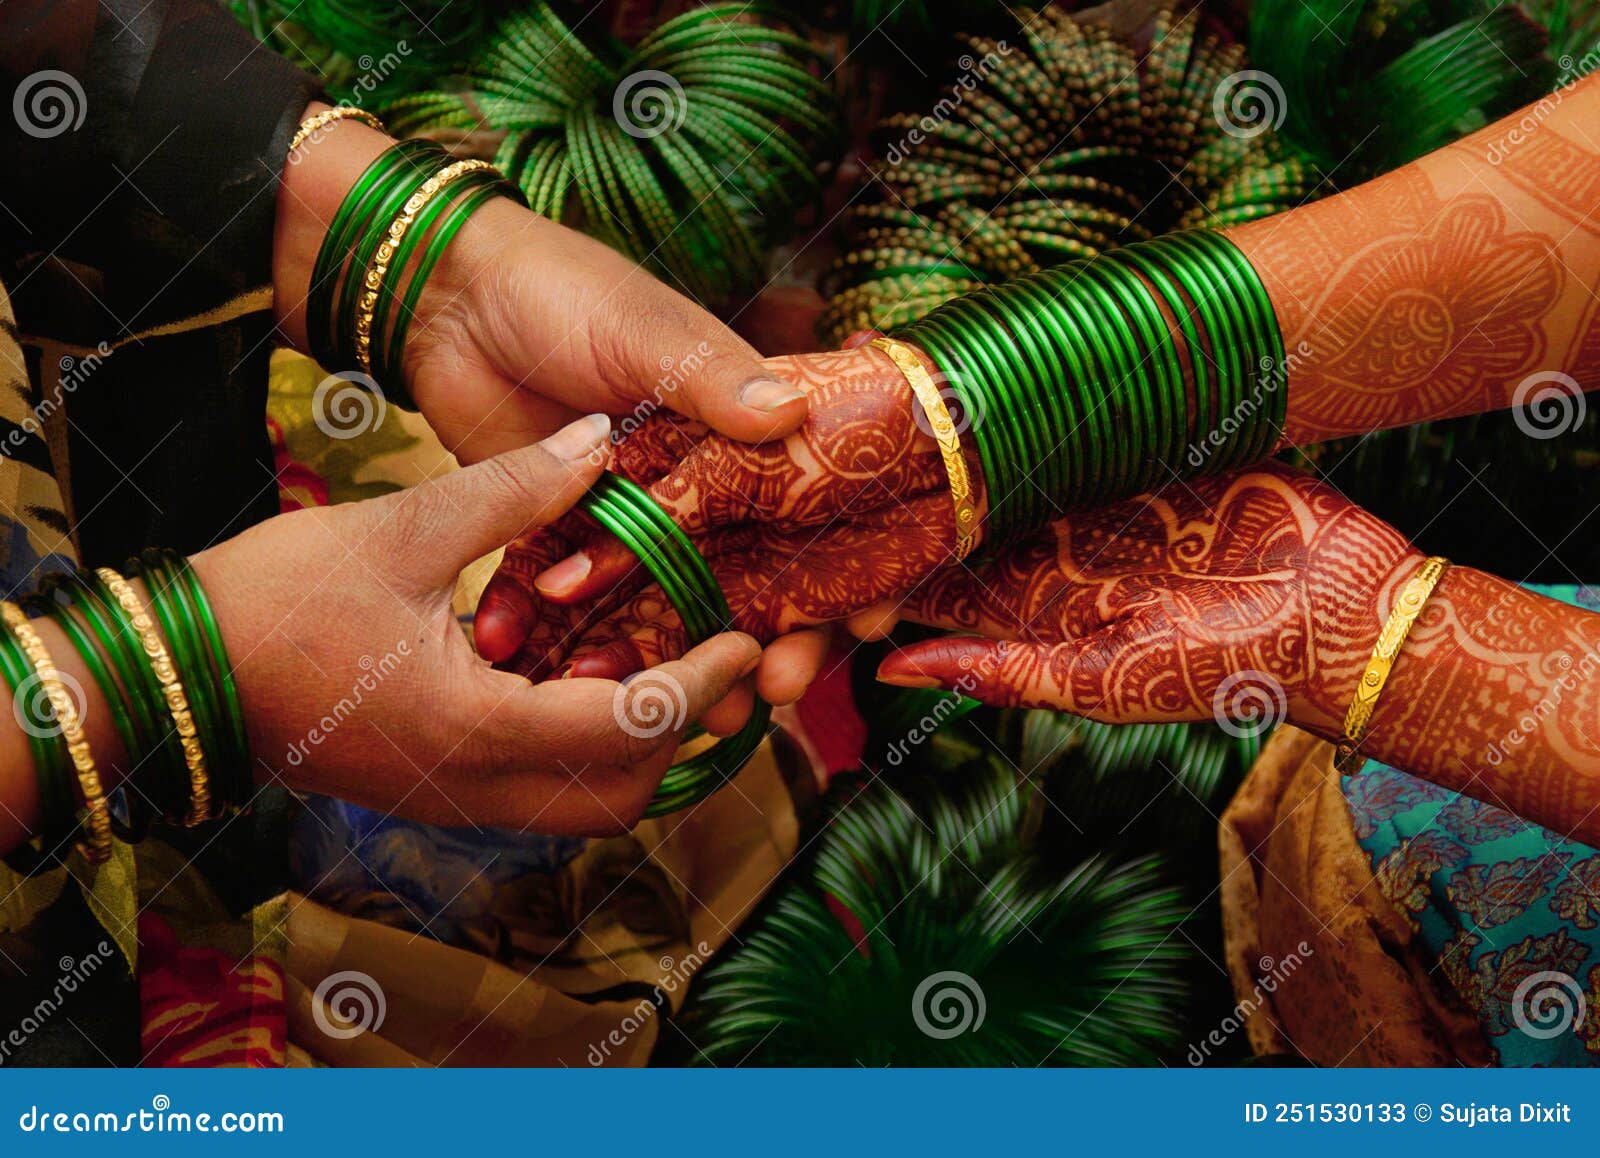 maharashtrian pre wedding bangle ceremony.